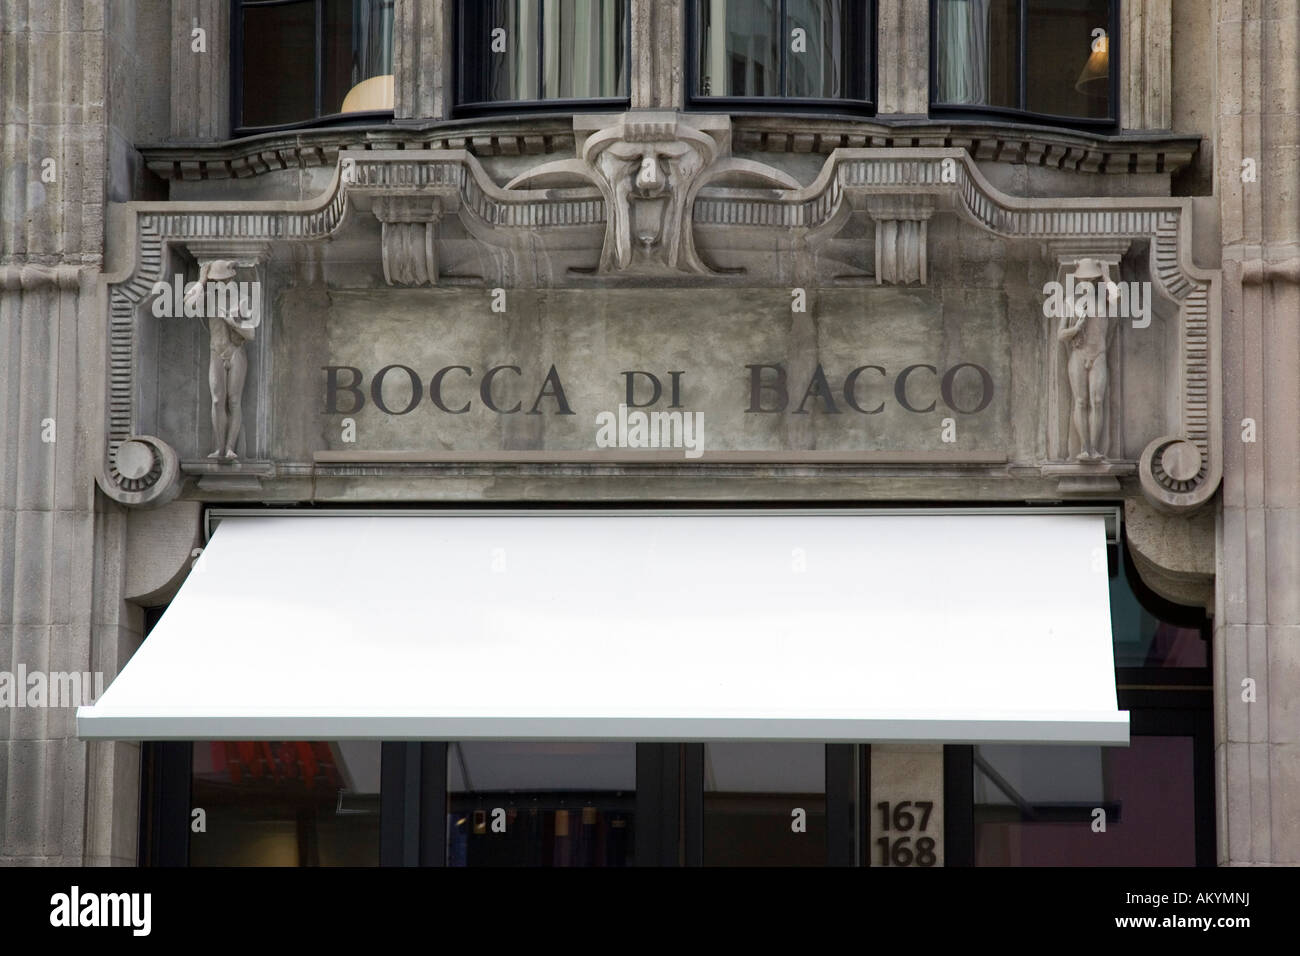 Bocca Di Bacco - VIP-Restaurant in Berlin, Germany Stock Photo - Alamy